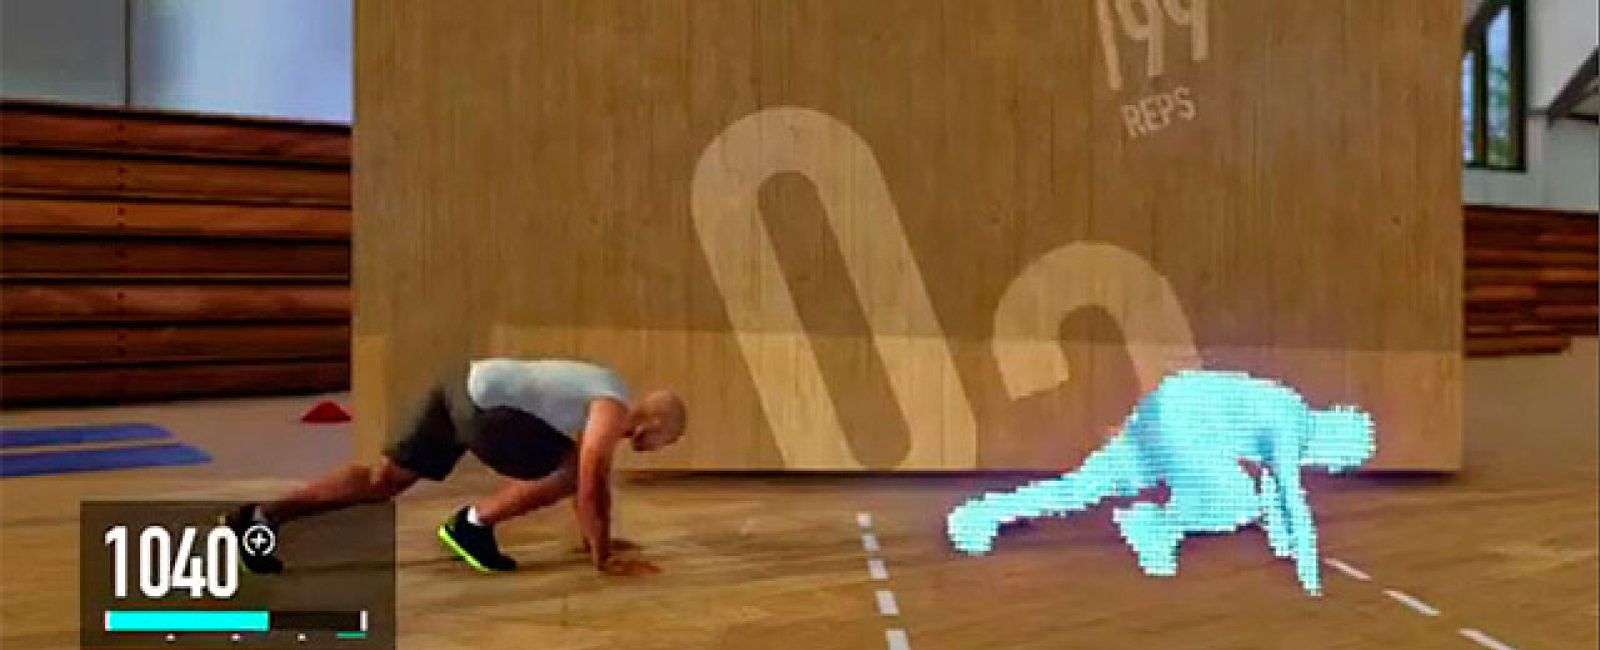 Foto: Nike lanza un juego que promete entrenarte como a un profesional